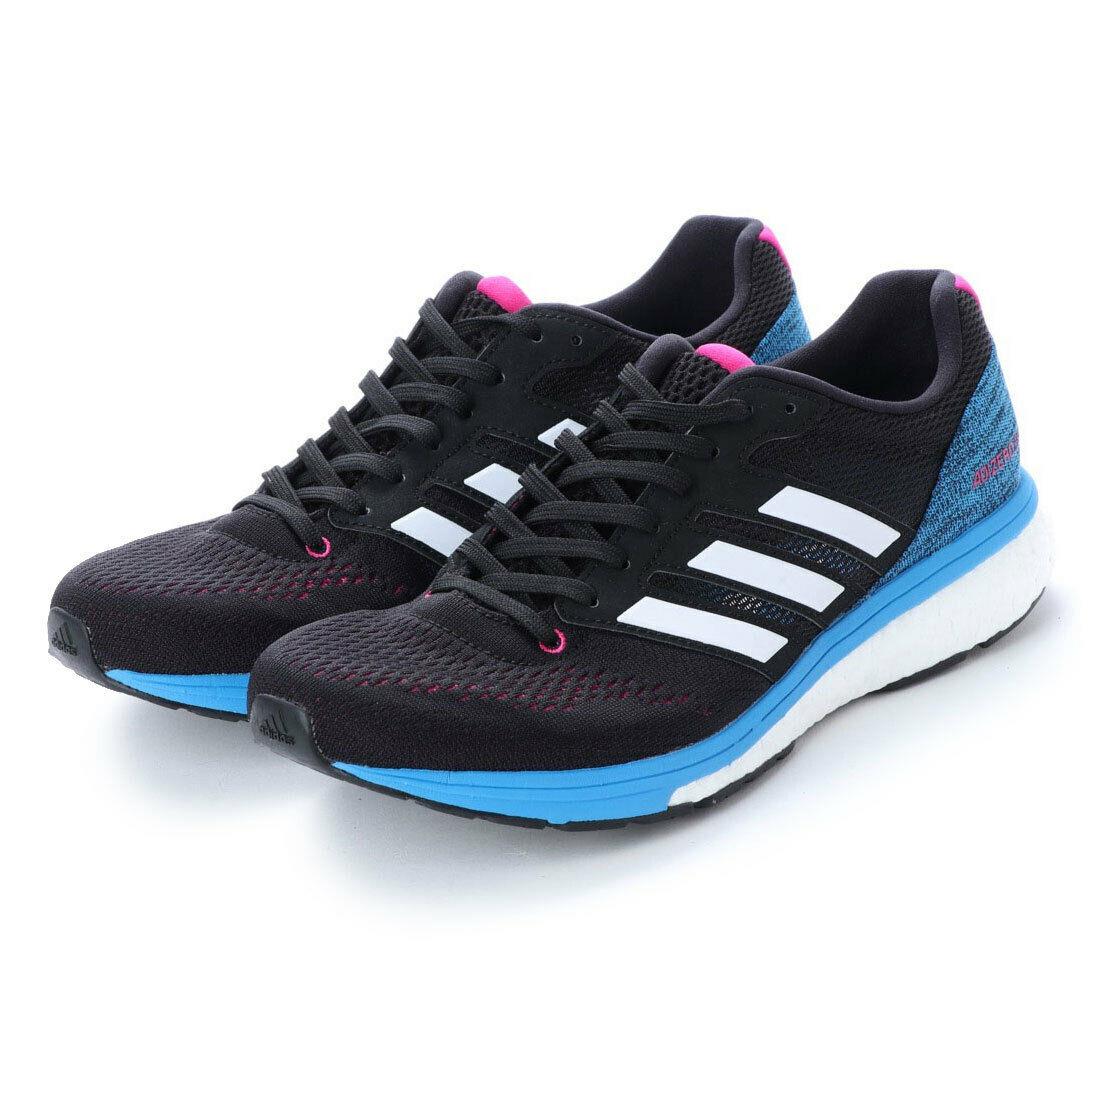 Women Adidas Adizero Boston 7 Running Shoes Black Sneakers Size 5 5.5 - Black